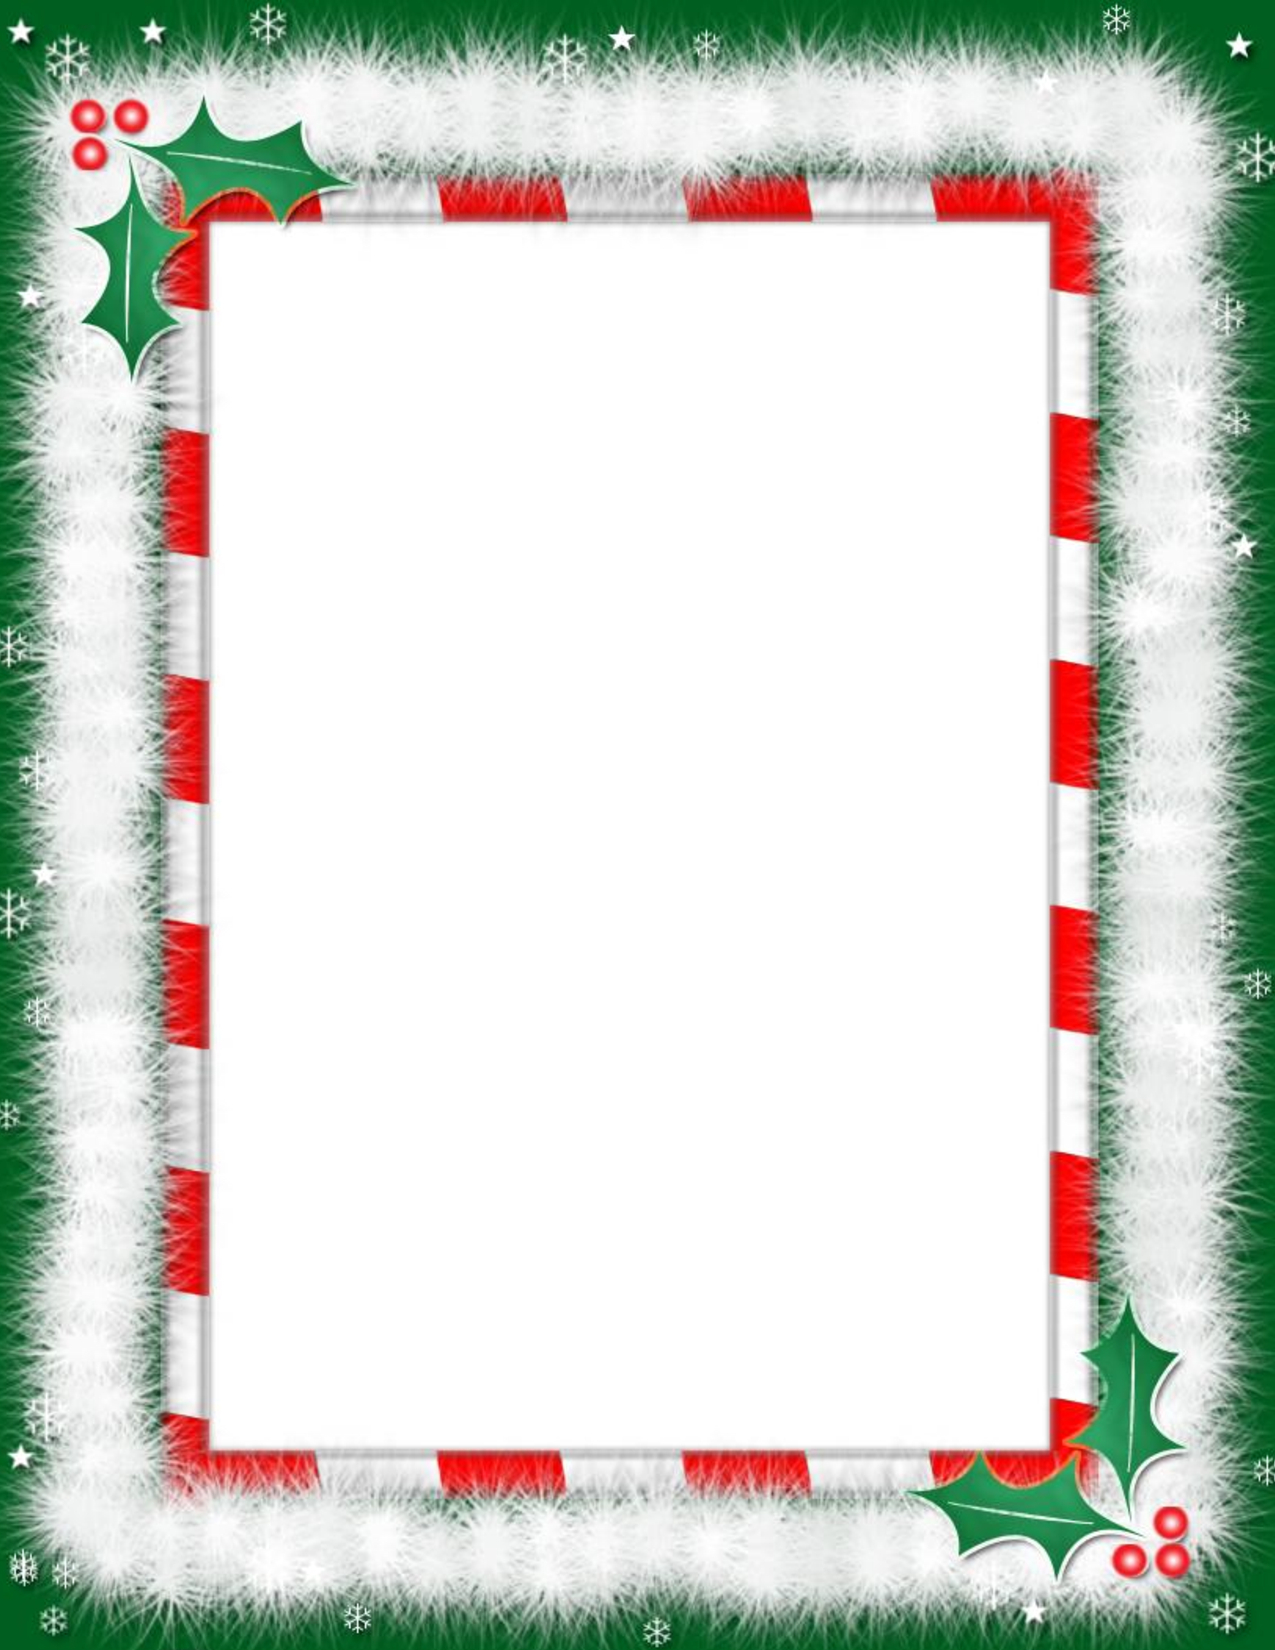 Free Christmas Letter Borders | Christmas Border Template - Free Printable Christmas Paper With Borders